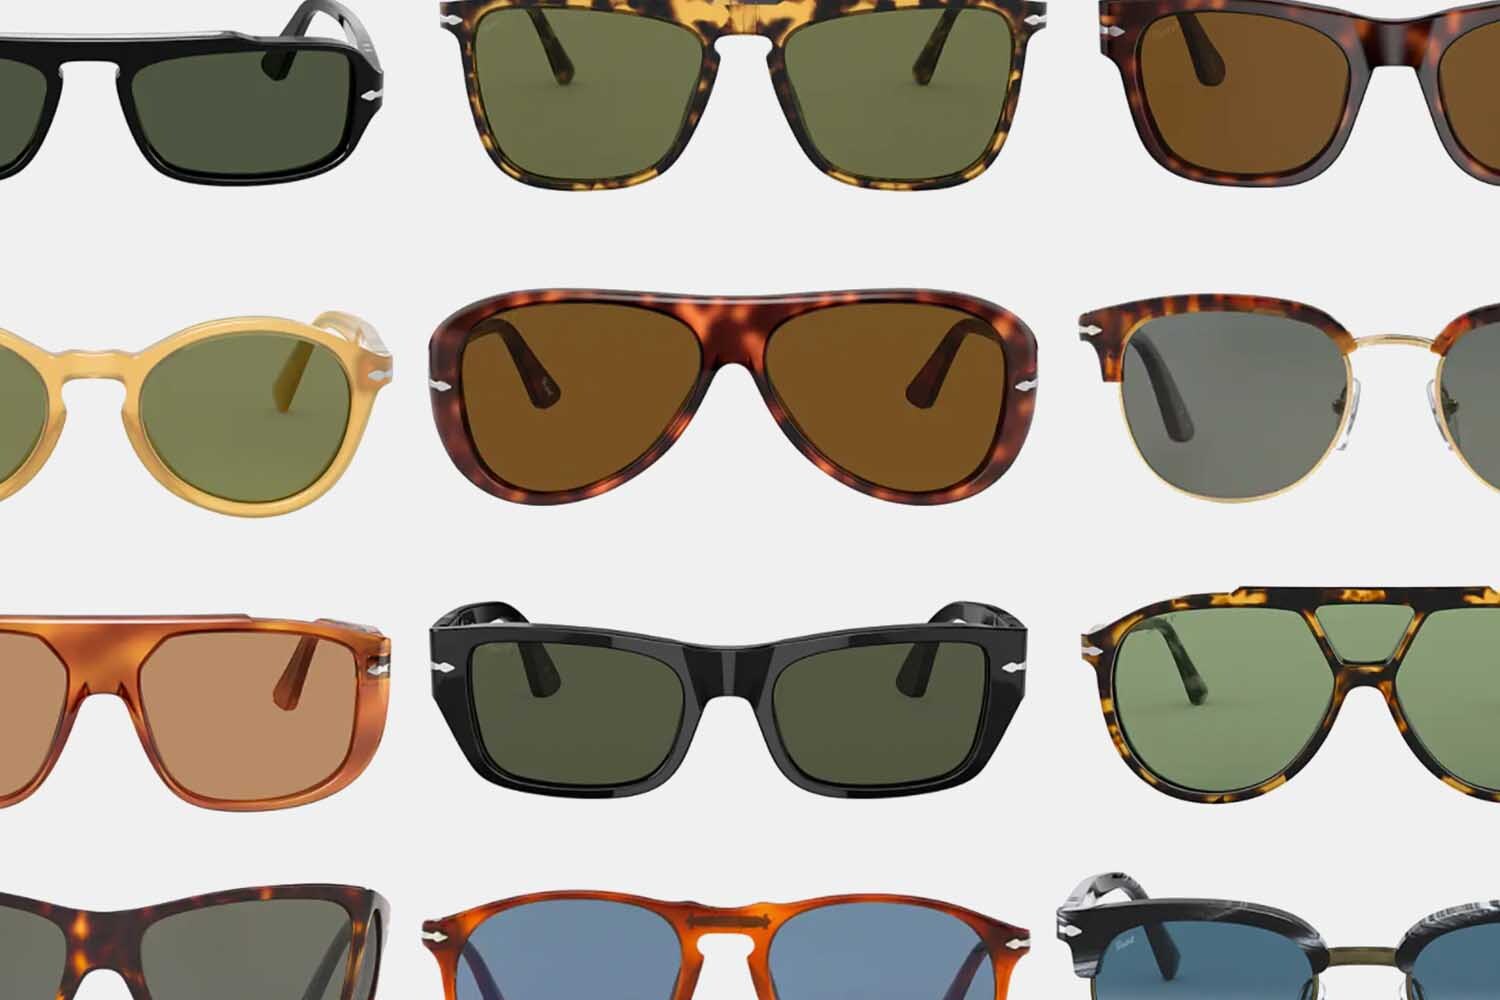 Iconic Persol sunglasses